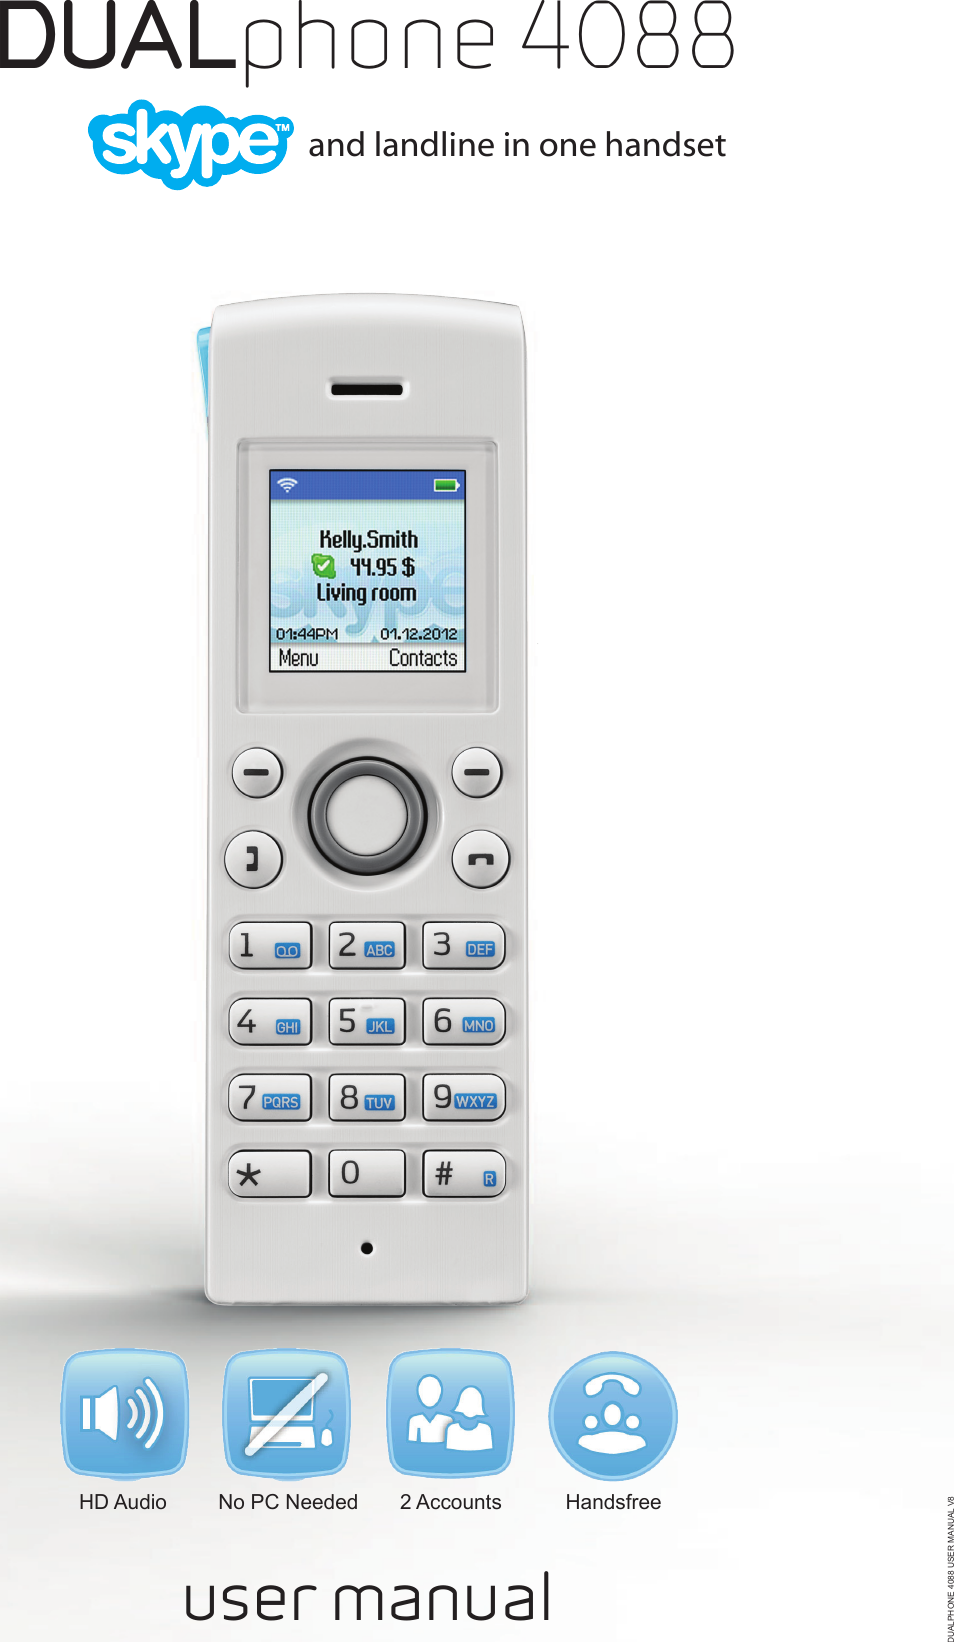 DUALphone 4088and landline in one handset user manualNo PC NeededHD Audio 2 Accounts HandsfreeDUALPHONE 4088 USER MANUAL V8